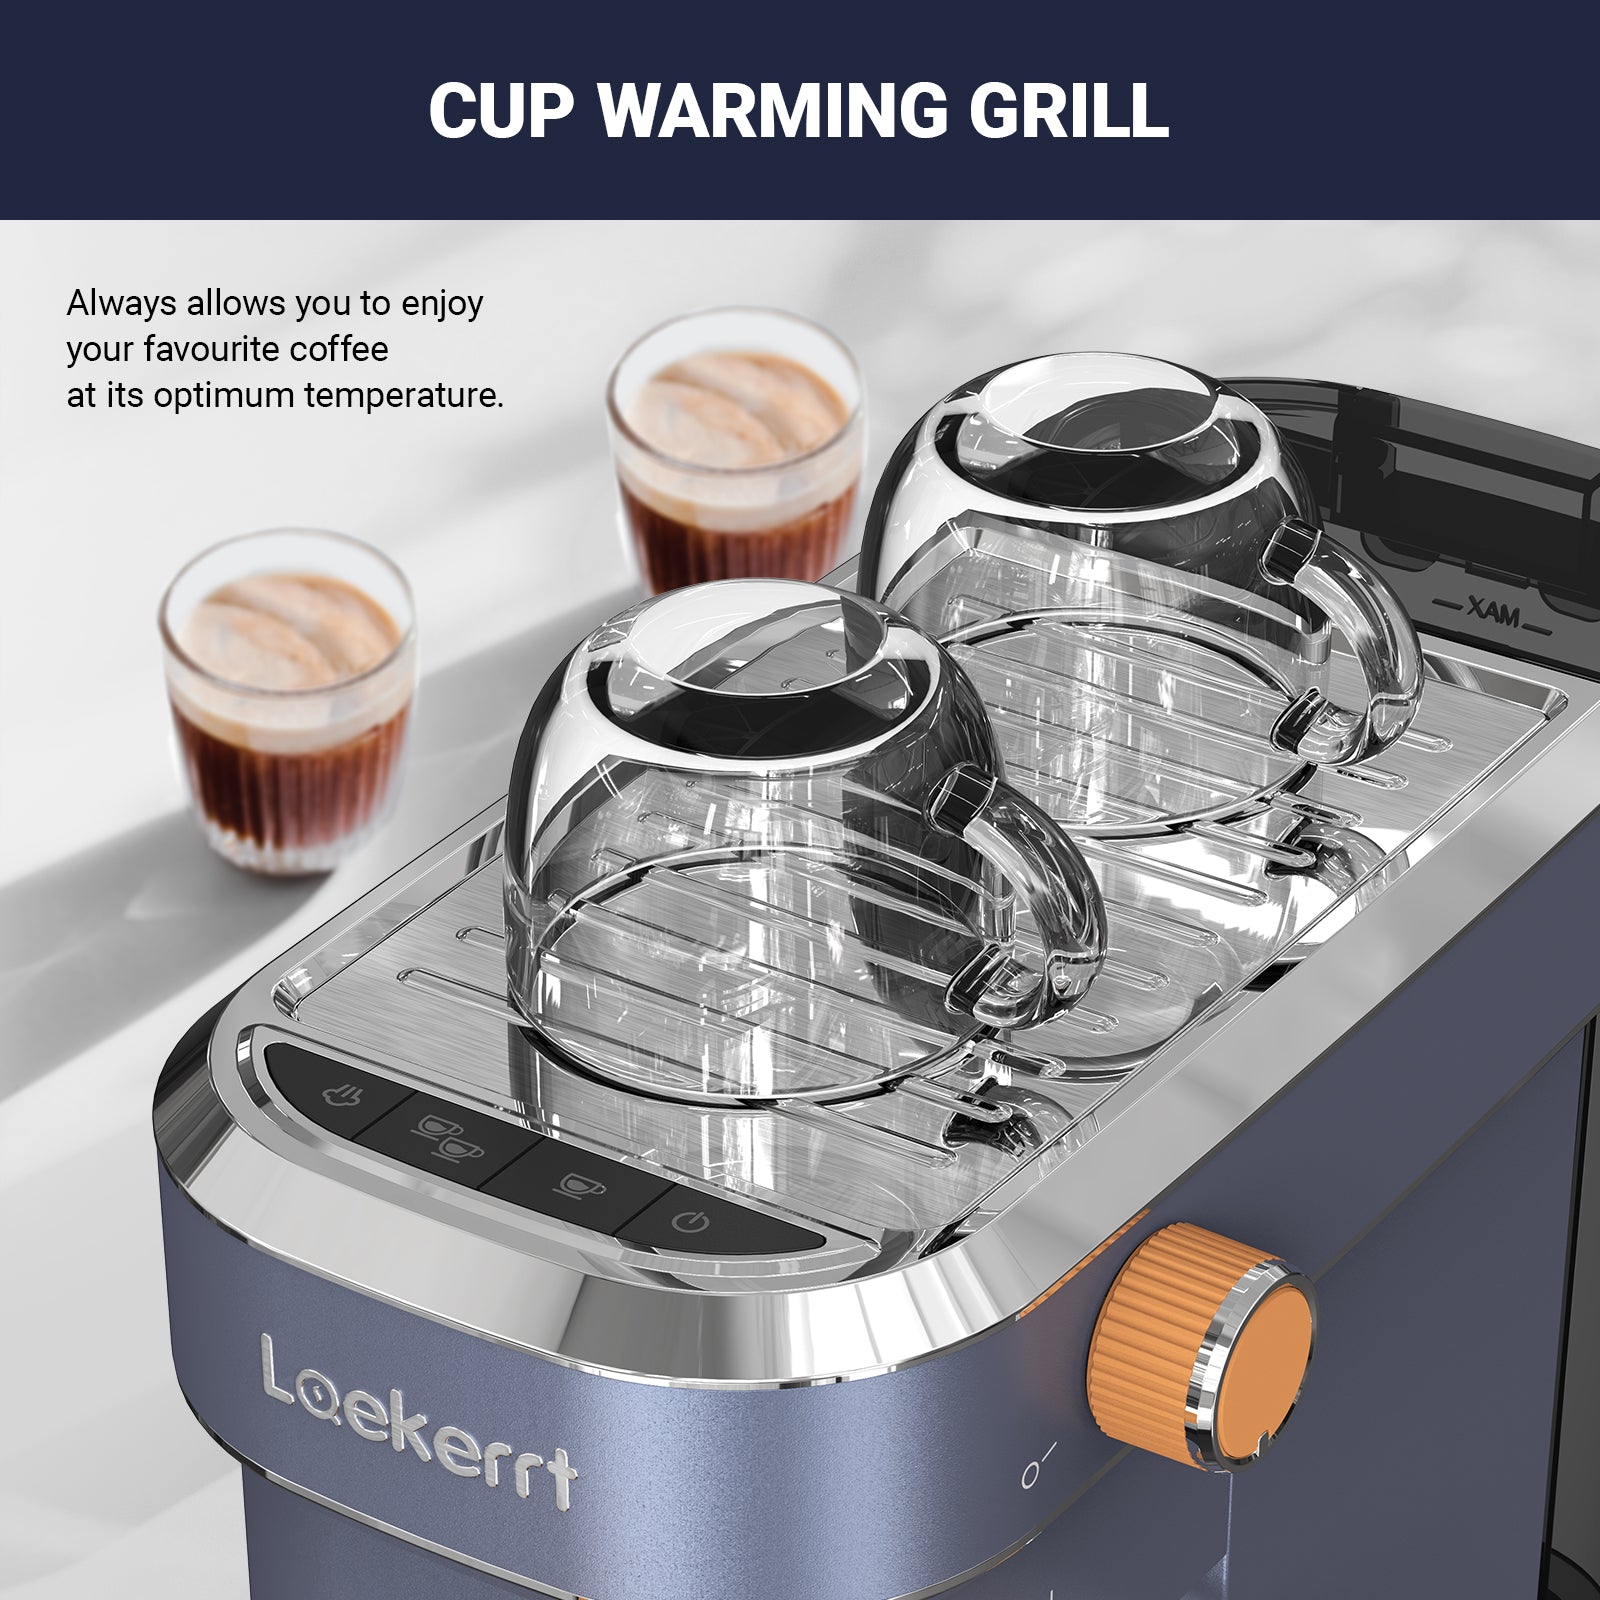 [Valentine's Day Gift] Laekerrt Espresso Machine 20 Bar Espresso Maker  CMEP01 with Milk Frother Steam Wand, Professional Expresso Machine for